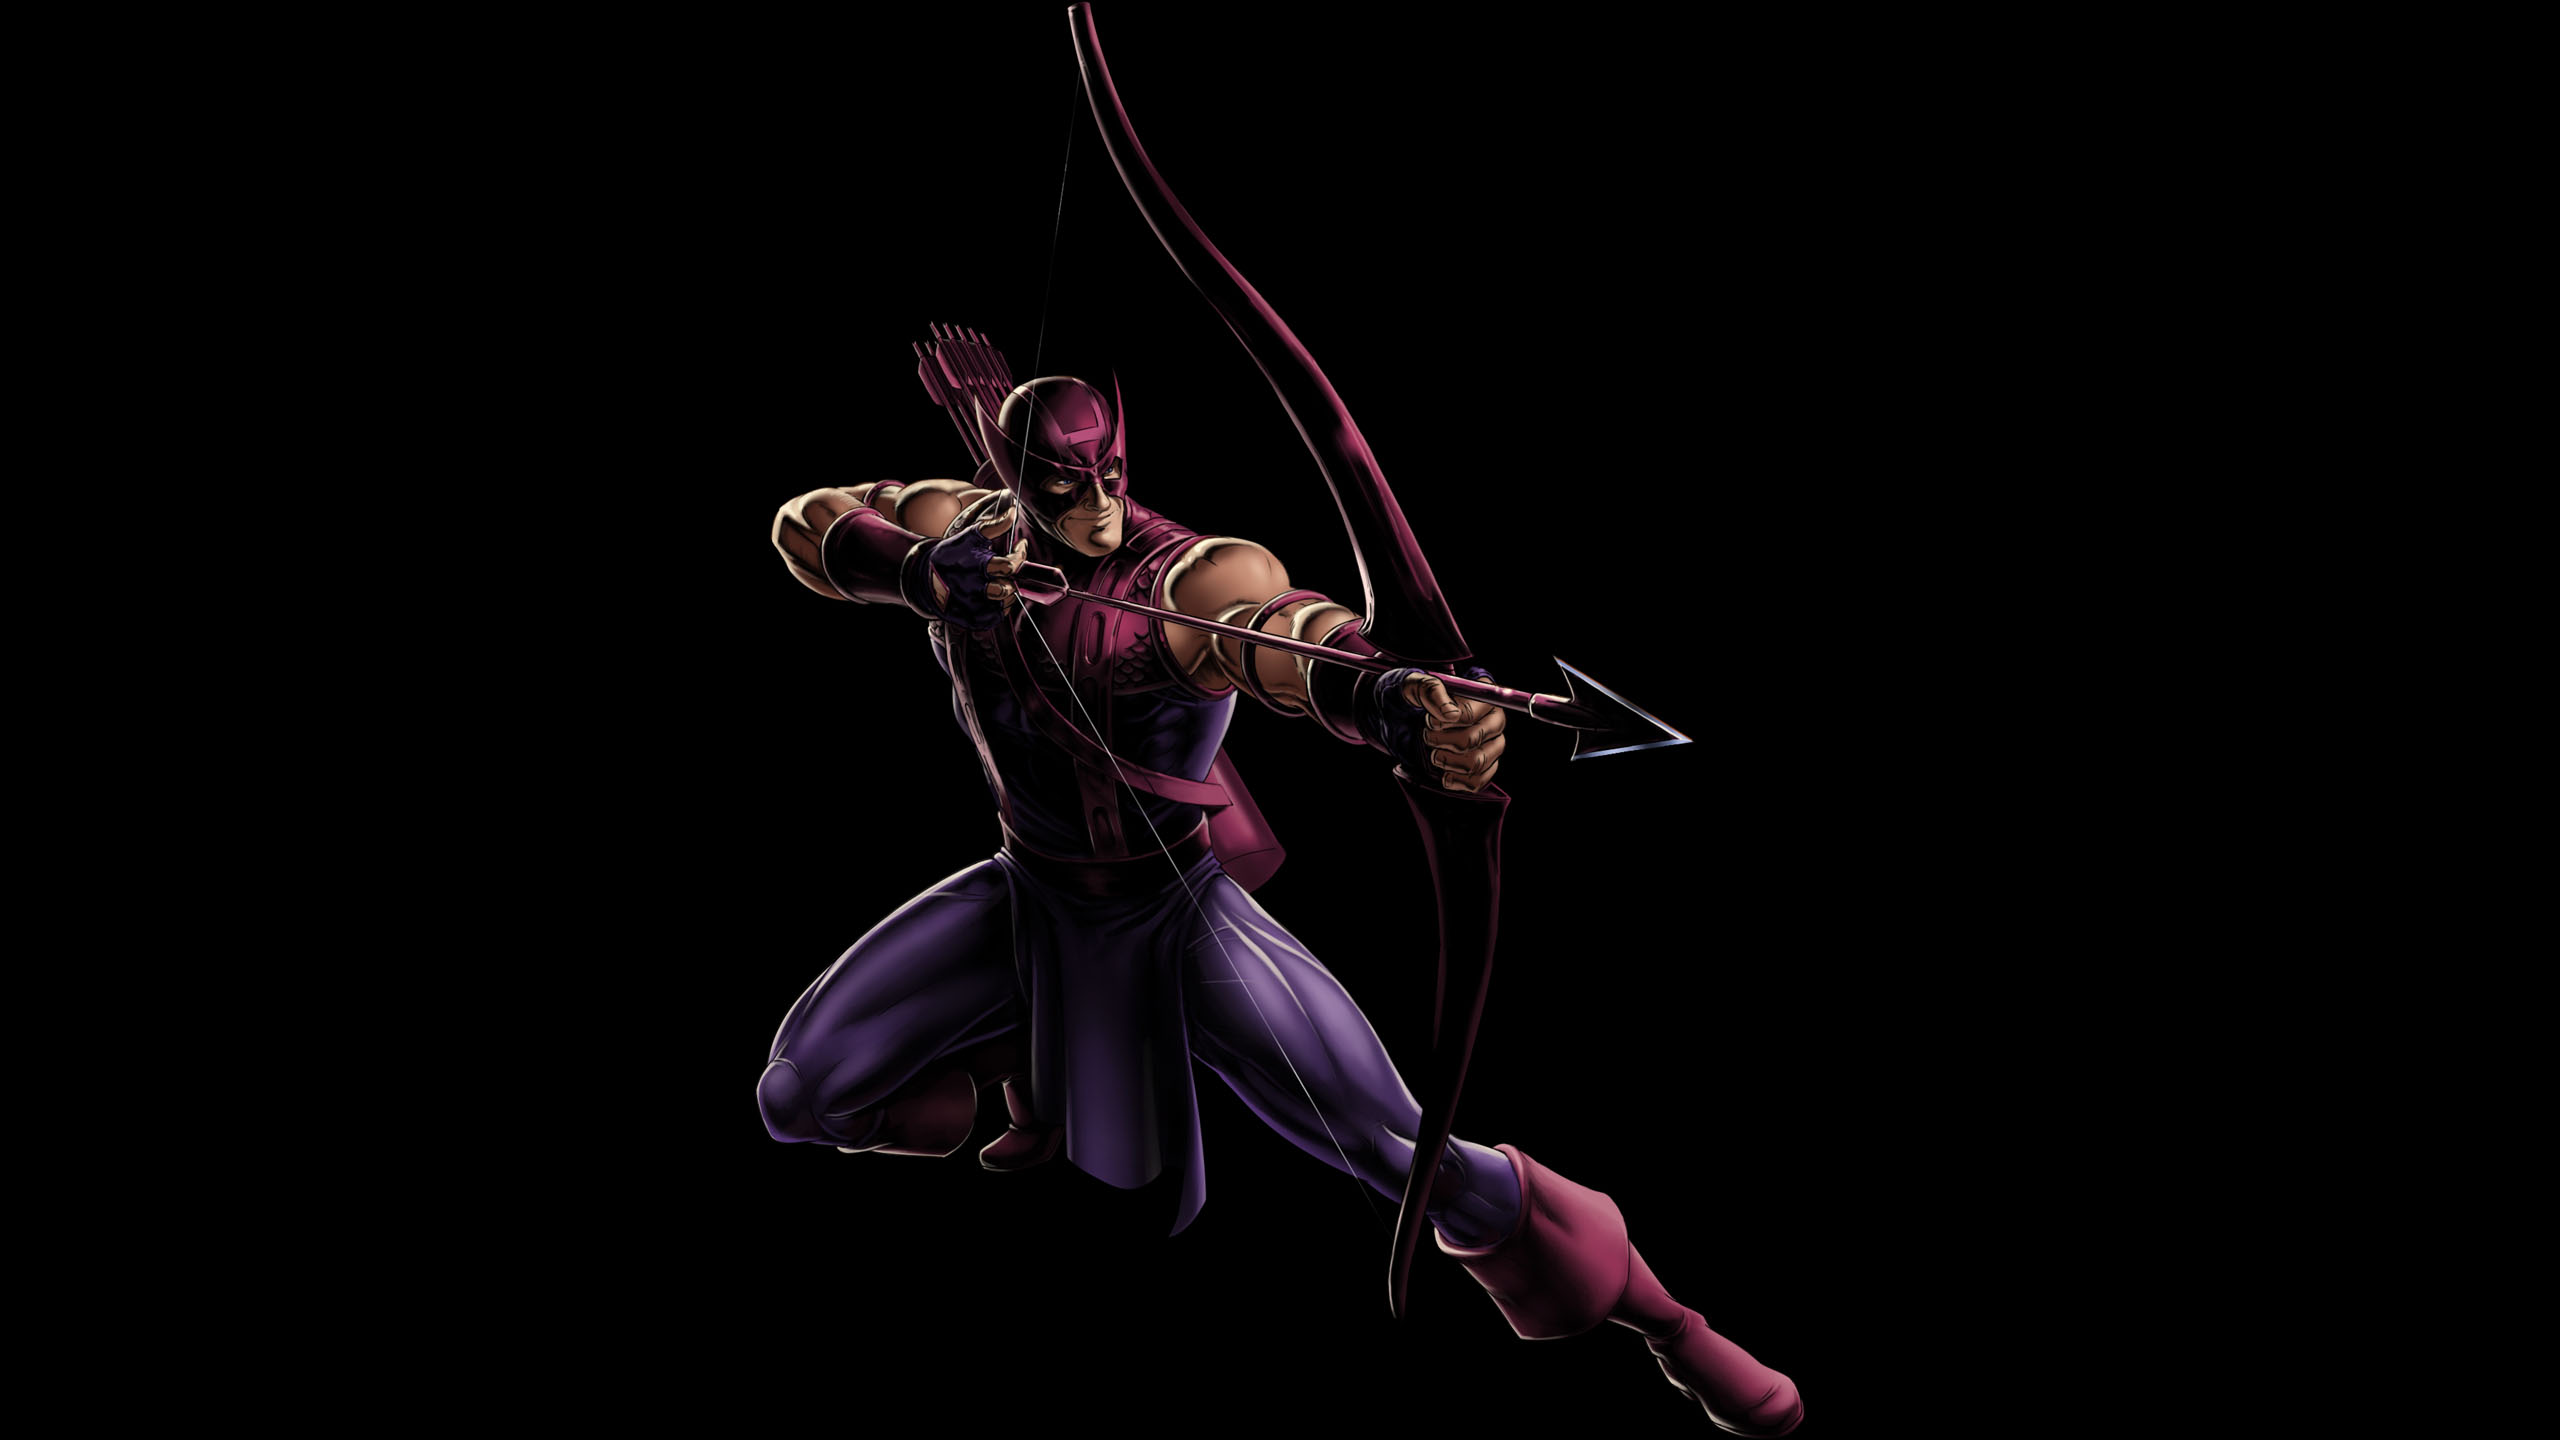 Comics Hawkeye HD Wallpaper | Background Image